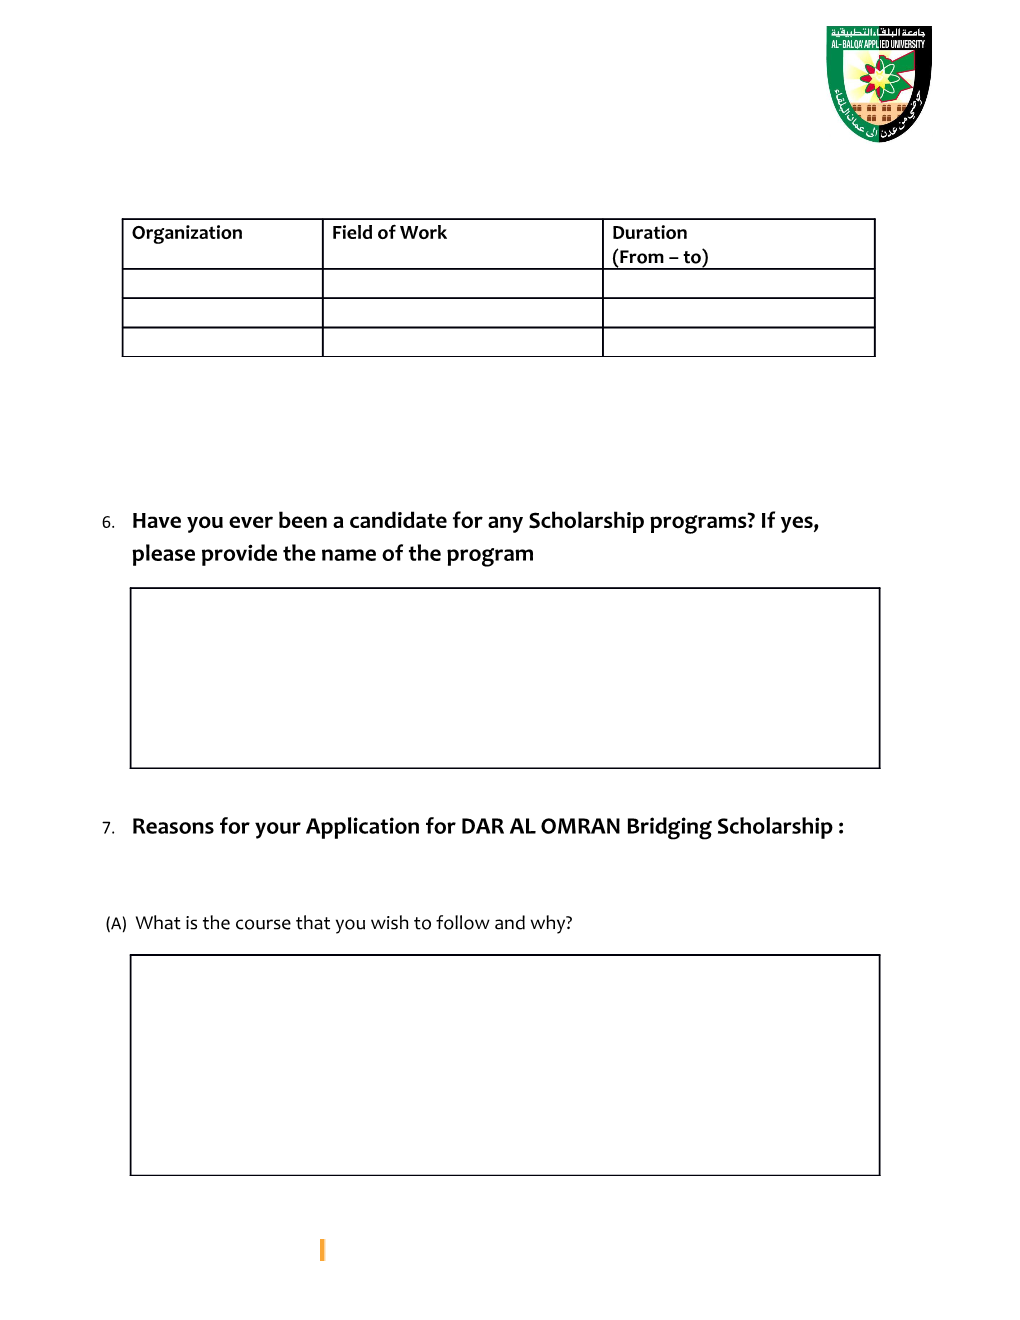 DAR AL OMRAN Bridging Scholarship Application 2017/2018